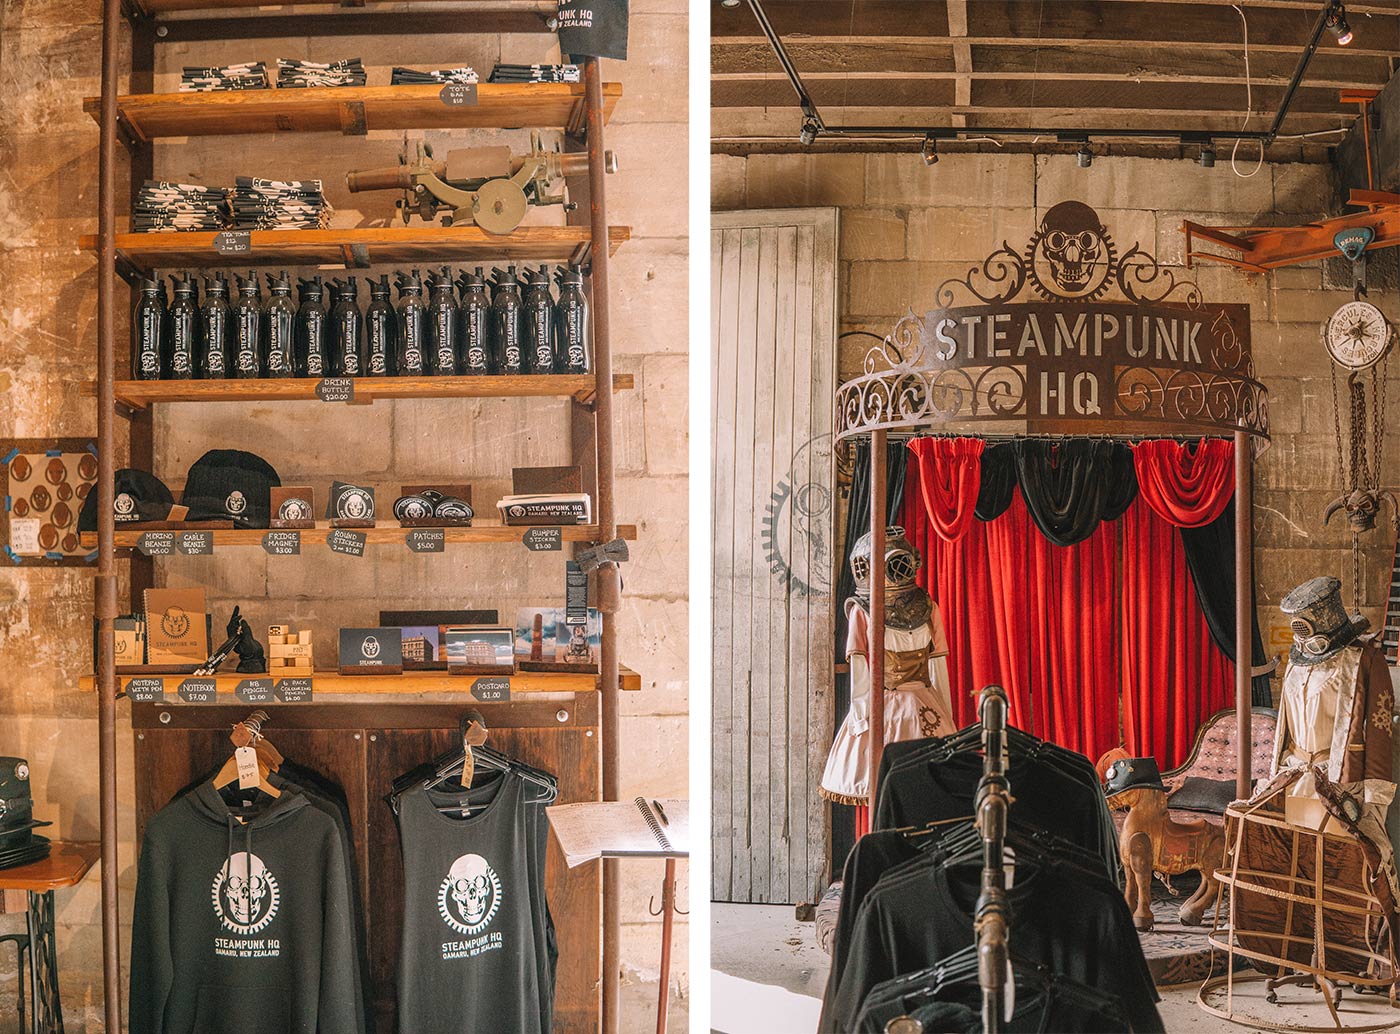 Steampunk HQ Gallery in Oamaru, New Zealand blog post